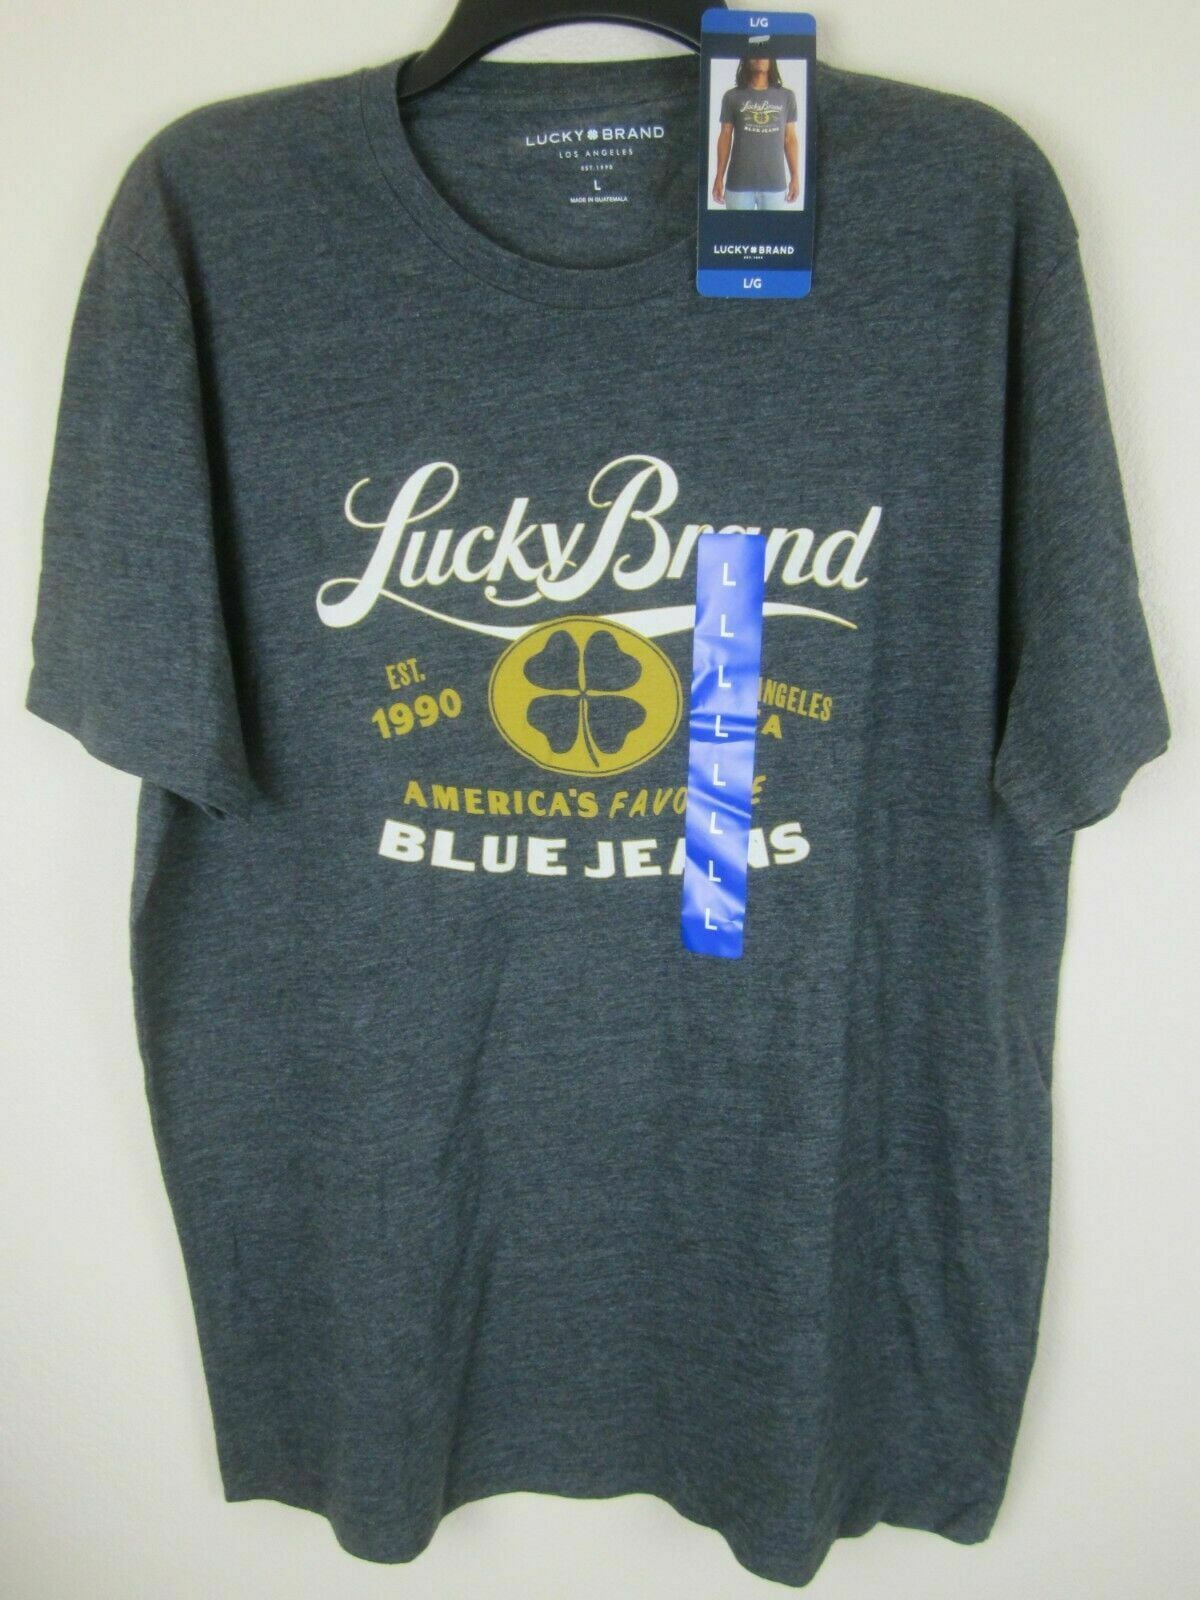 Lucky Brand - Blue T-Shirt - Tam. M Kids - Ei! Traz pra Mim?